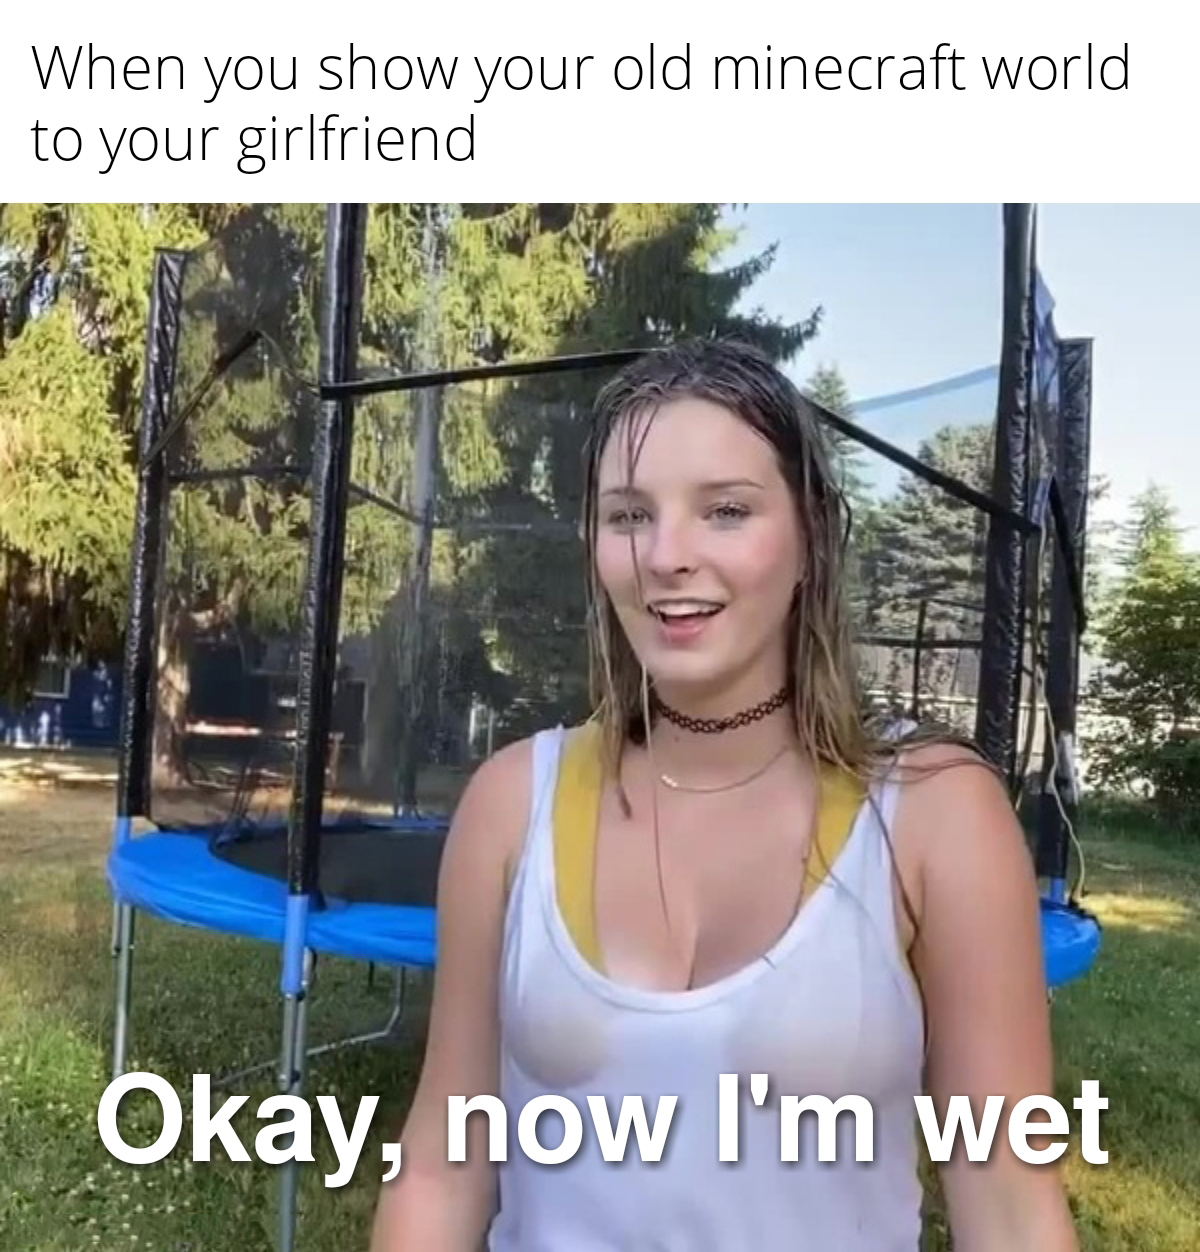 M so wet